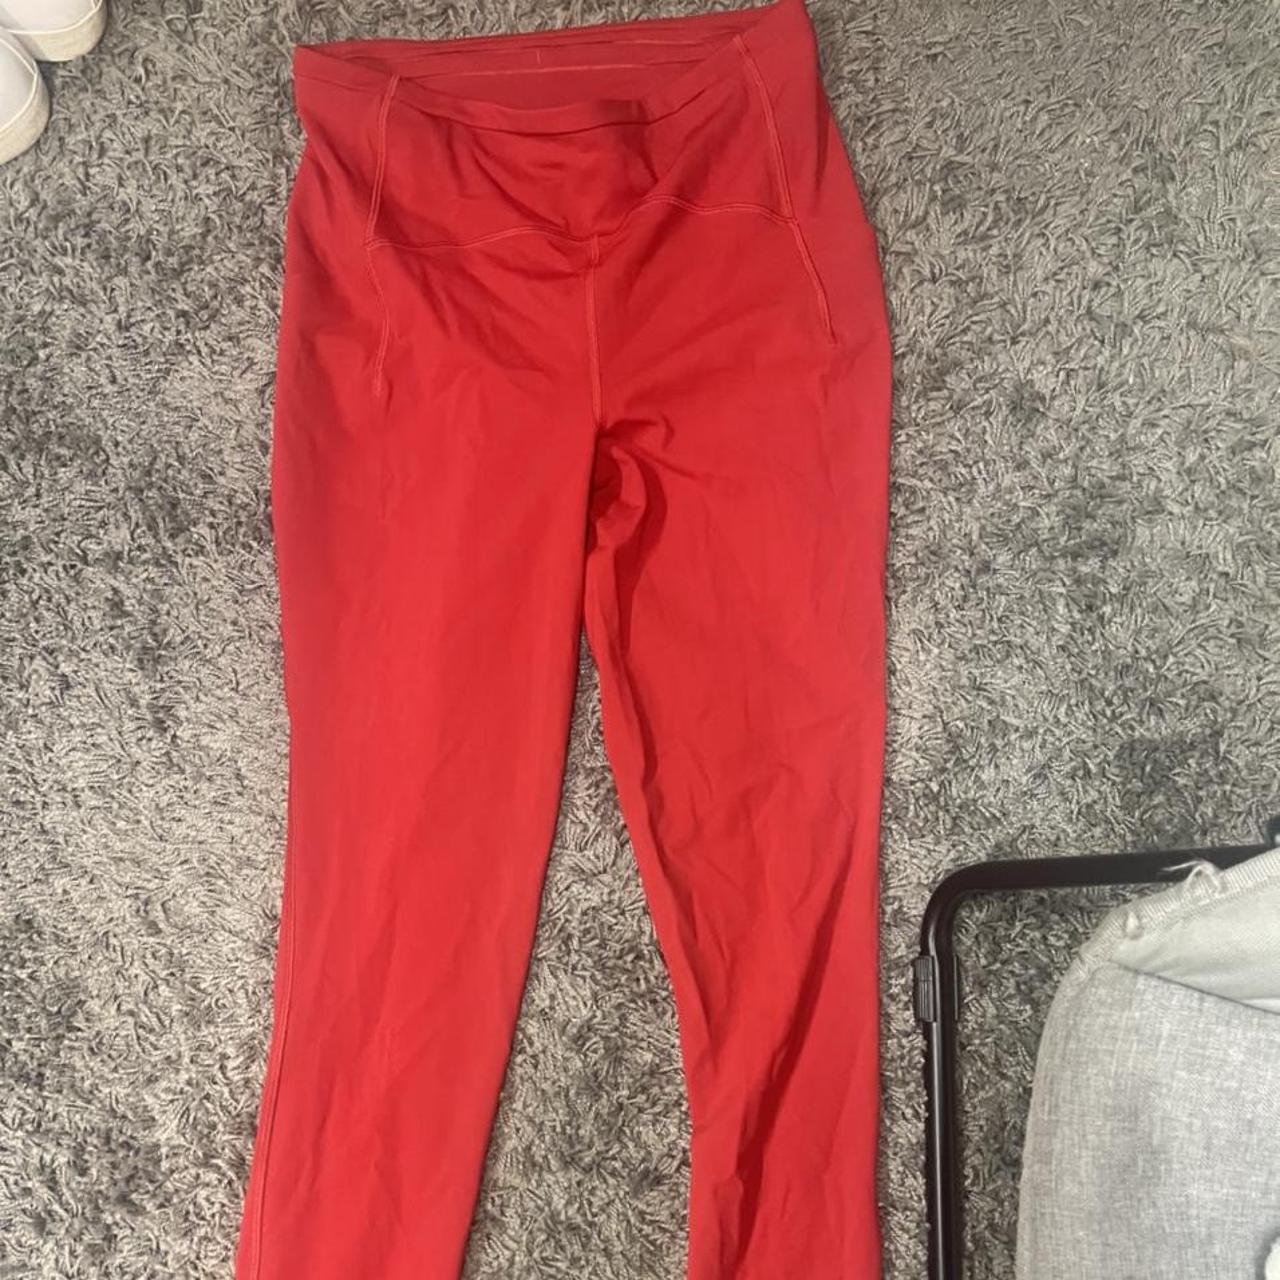 Red Align Lululemon Leggings Size 10. 28 inches